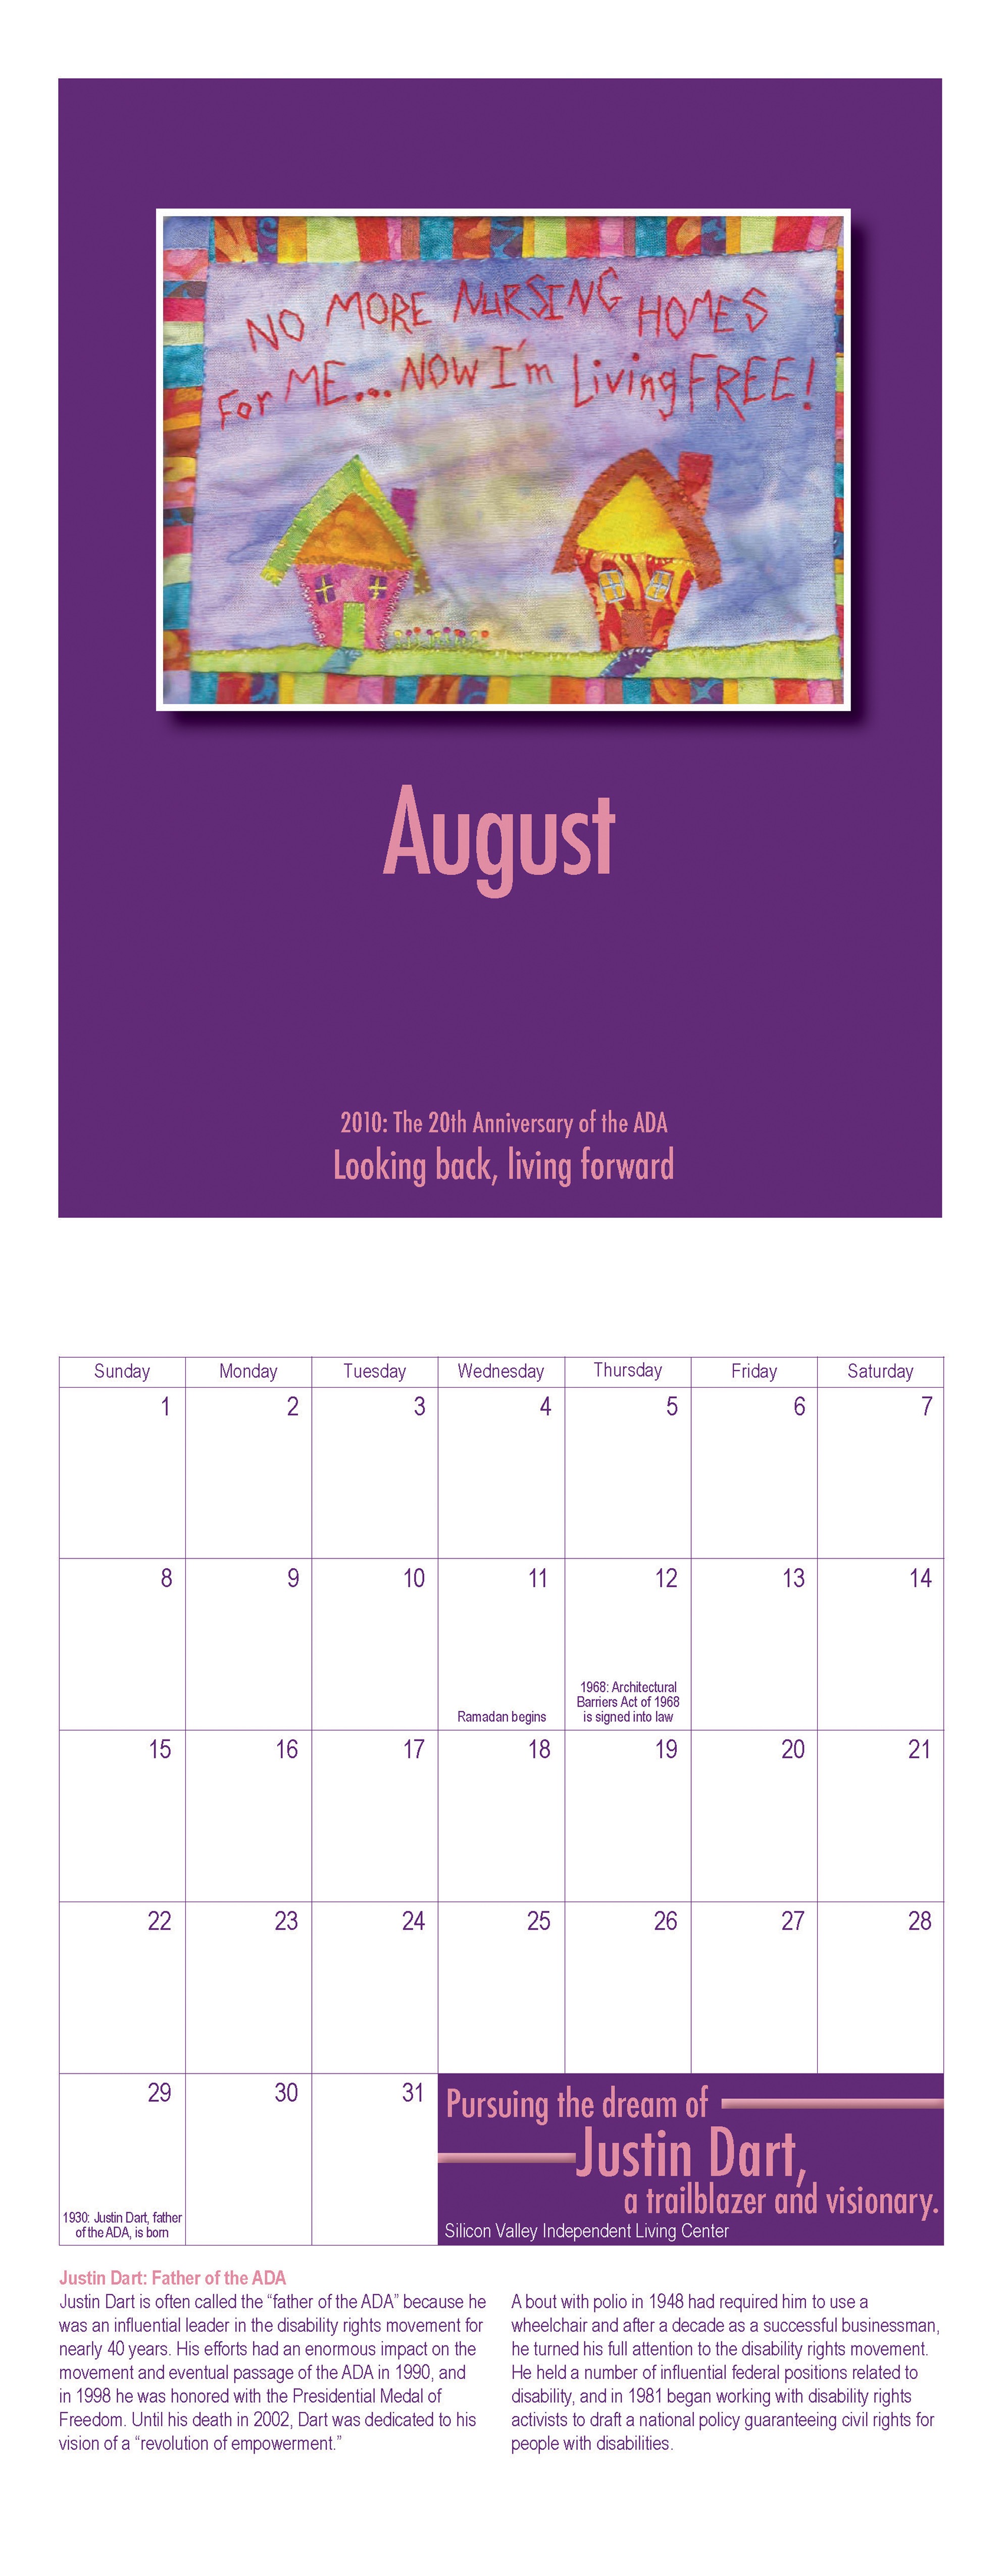   SVILC 2010 Calendar  August spread 